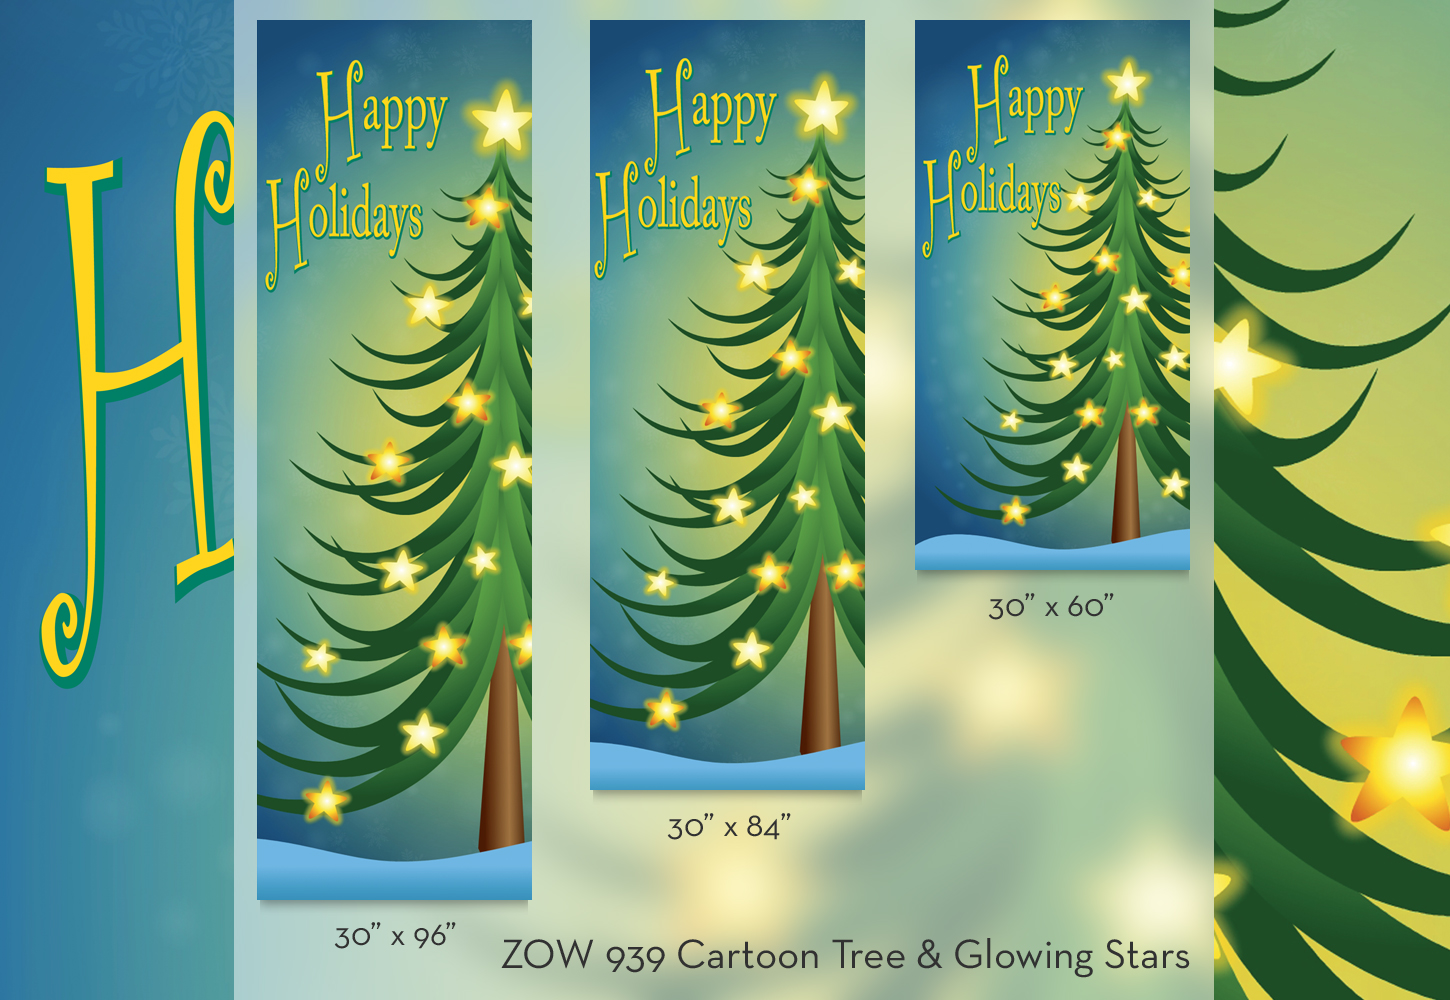 ZOW 939 Cartoon Tree & Glowing Stars